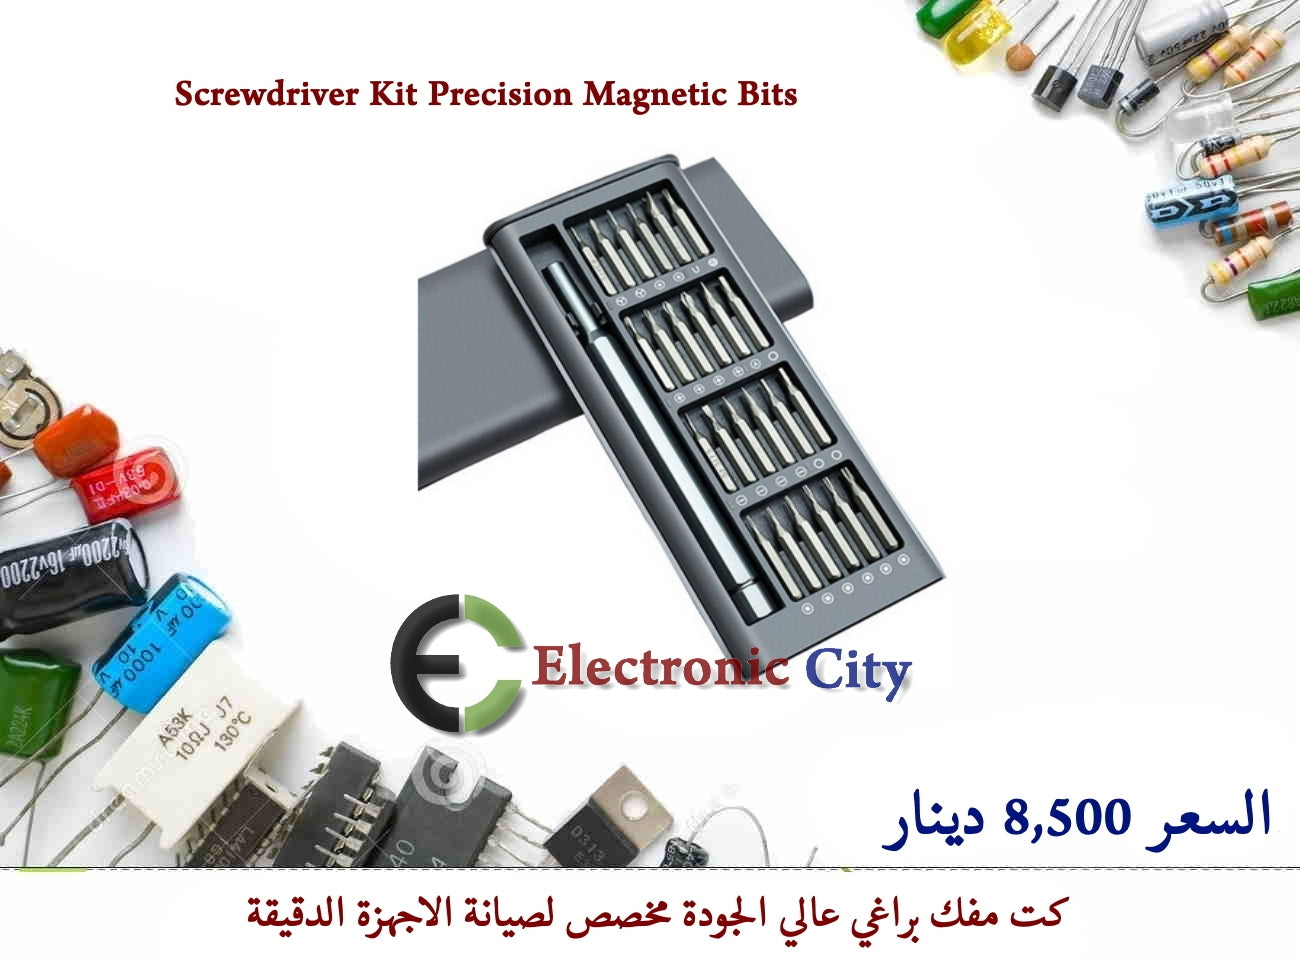 Screwdriver Kit Precision Magnetic Bits